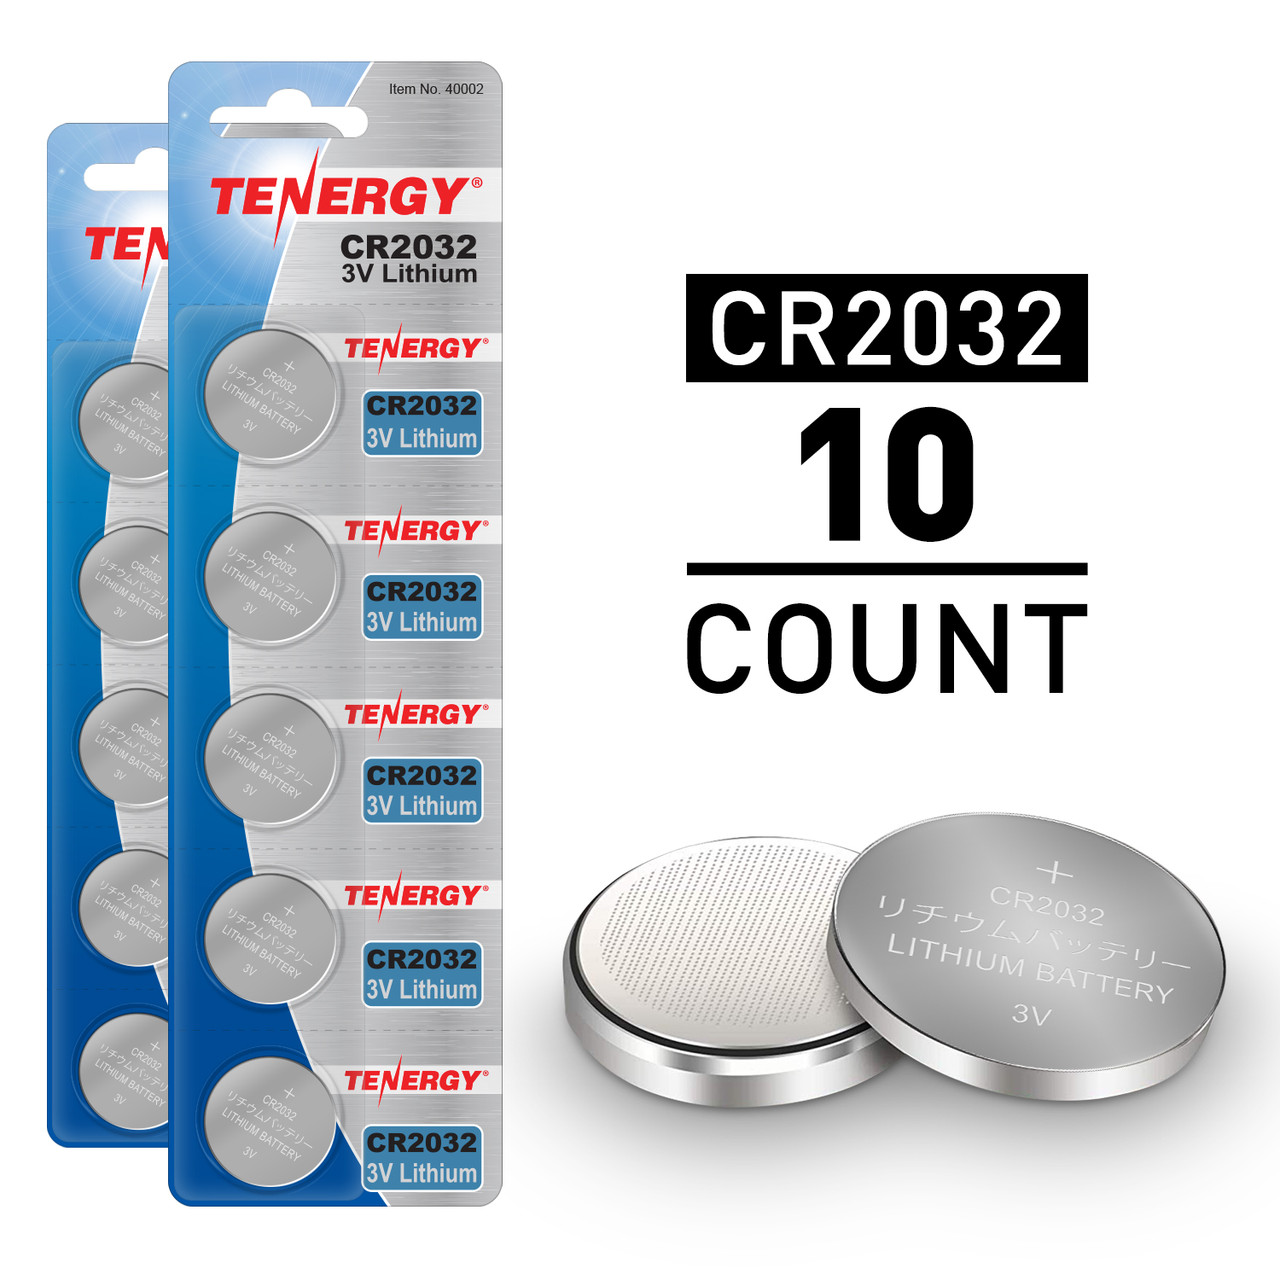 Tenergy CR2032 Lithium Button Cells, 10pcs (2 x Cards)